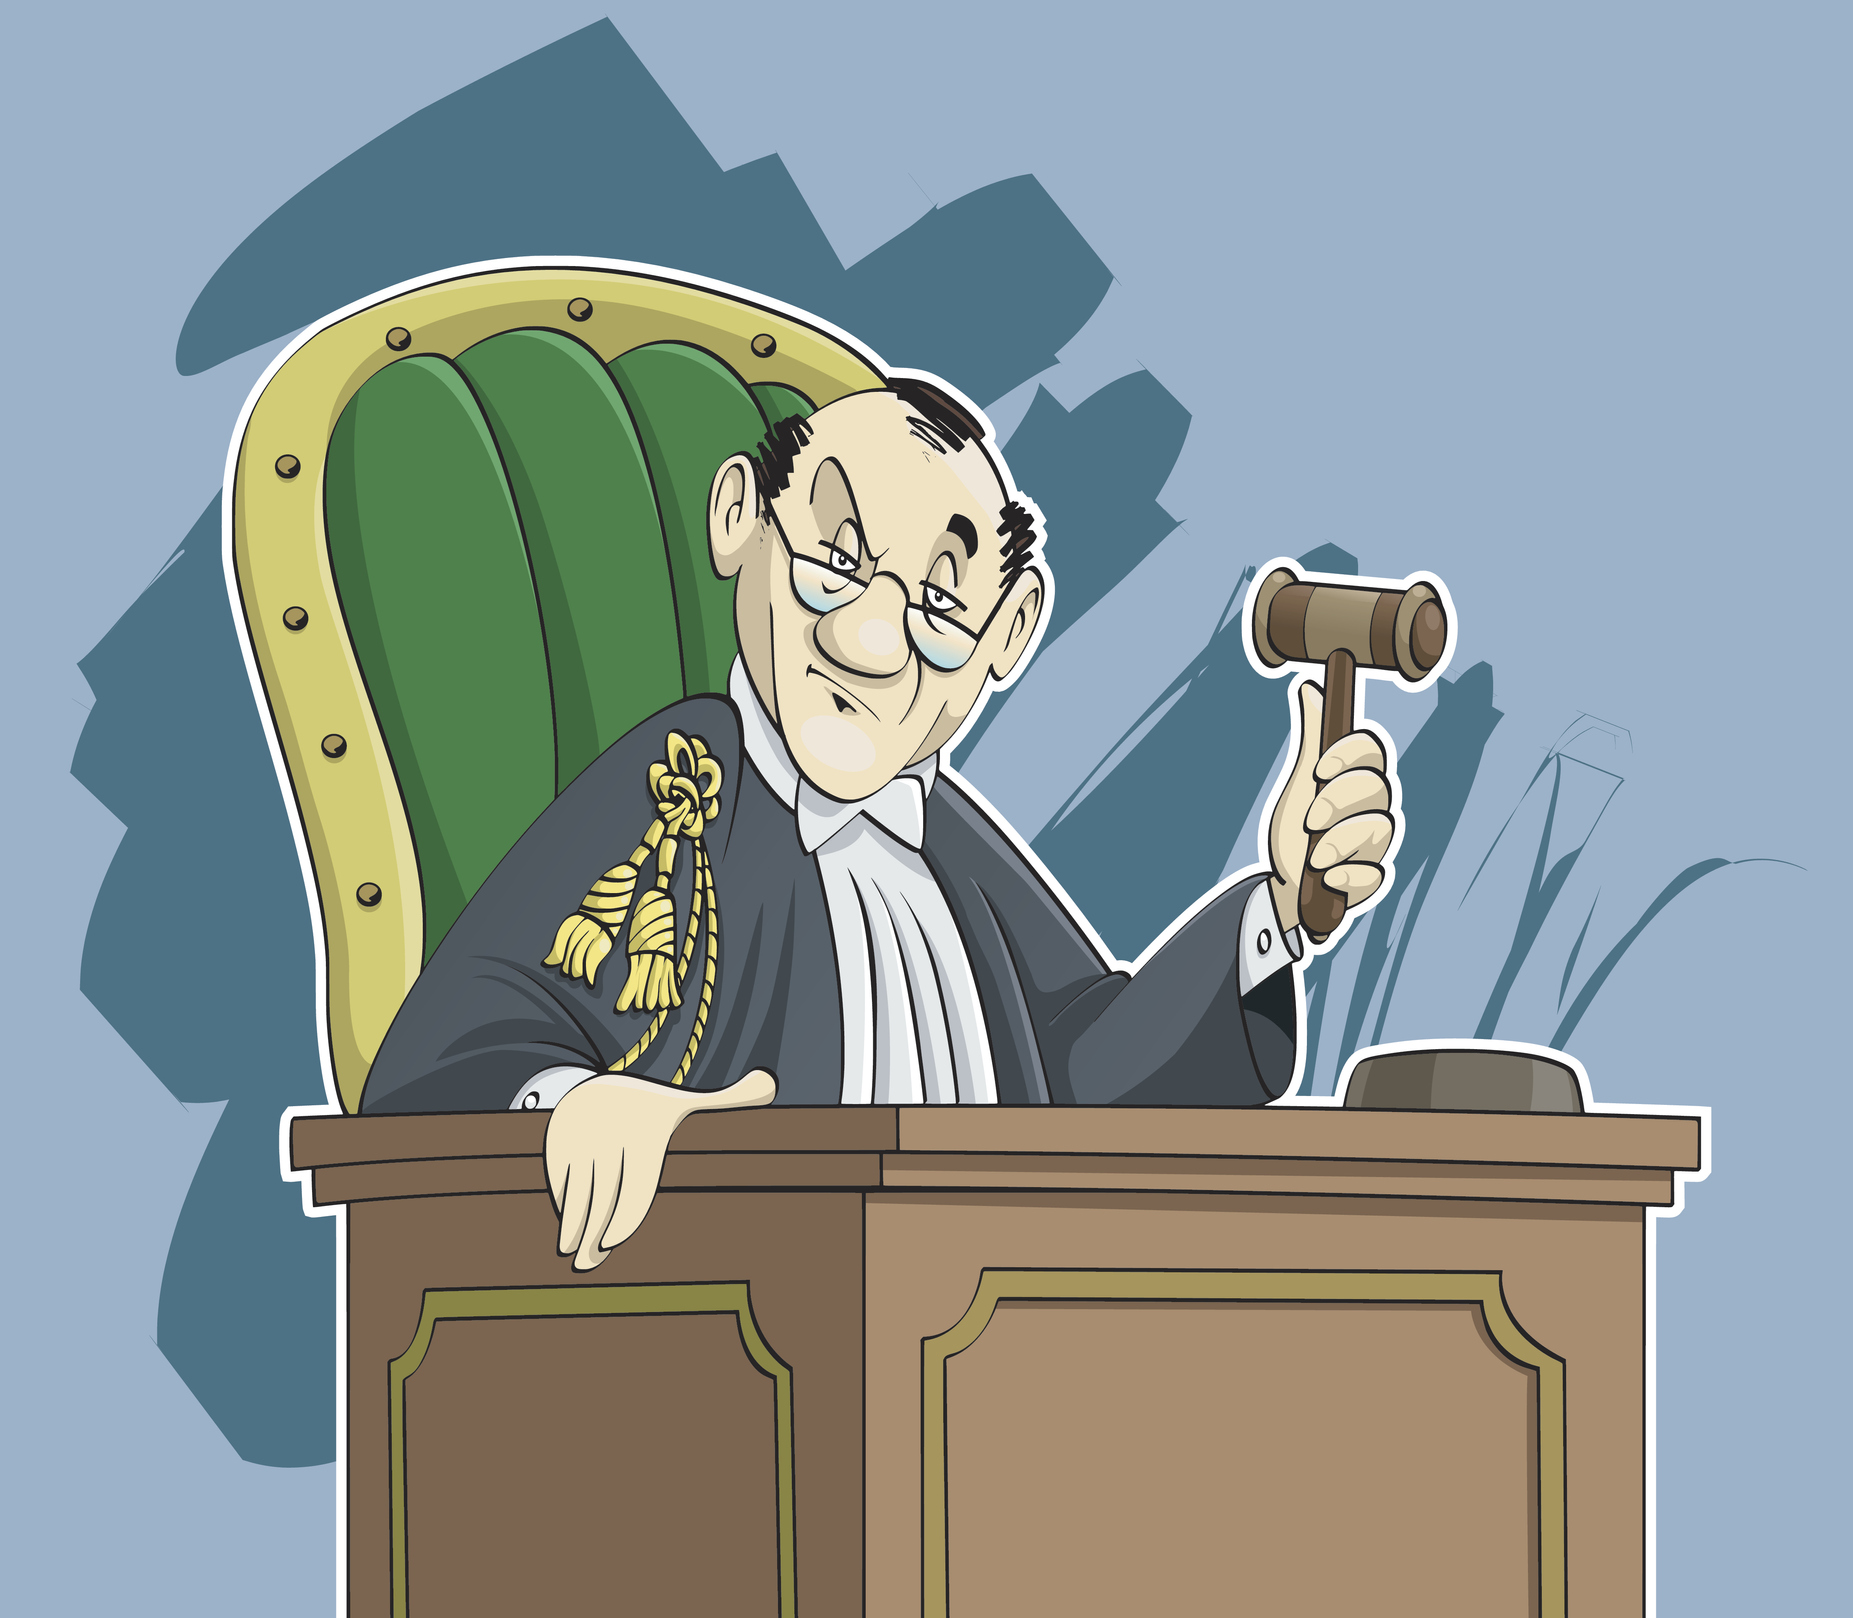 Судья заболел. Судья мультяшный. Cartoon судья. Суд мультяшный. Шарж судья.